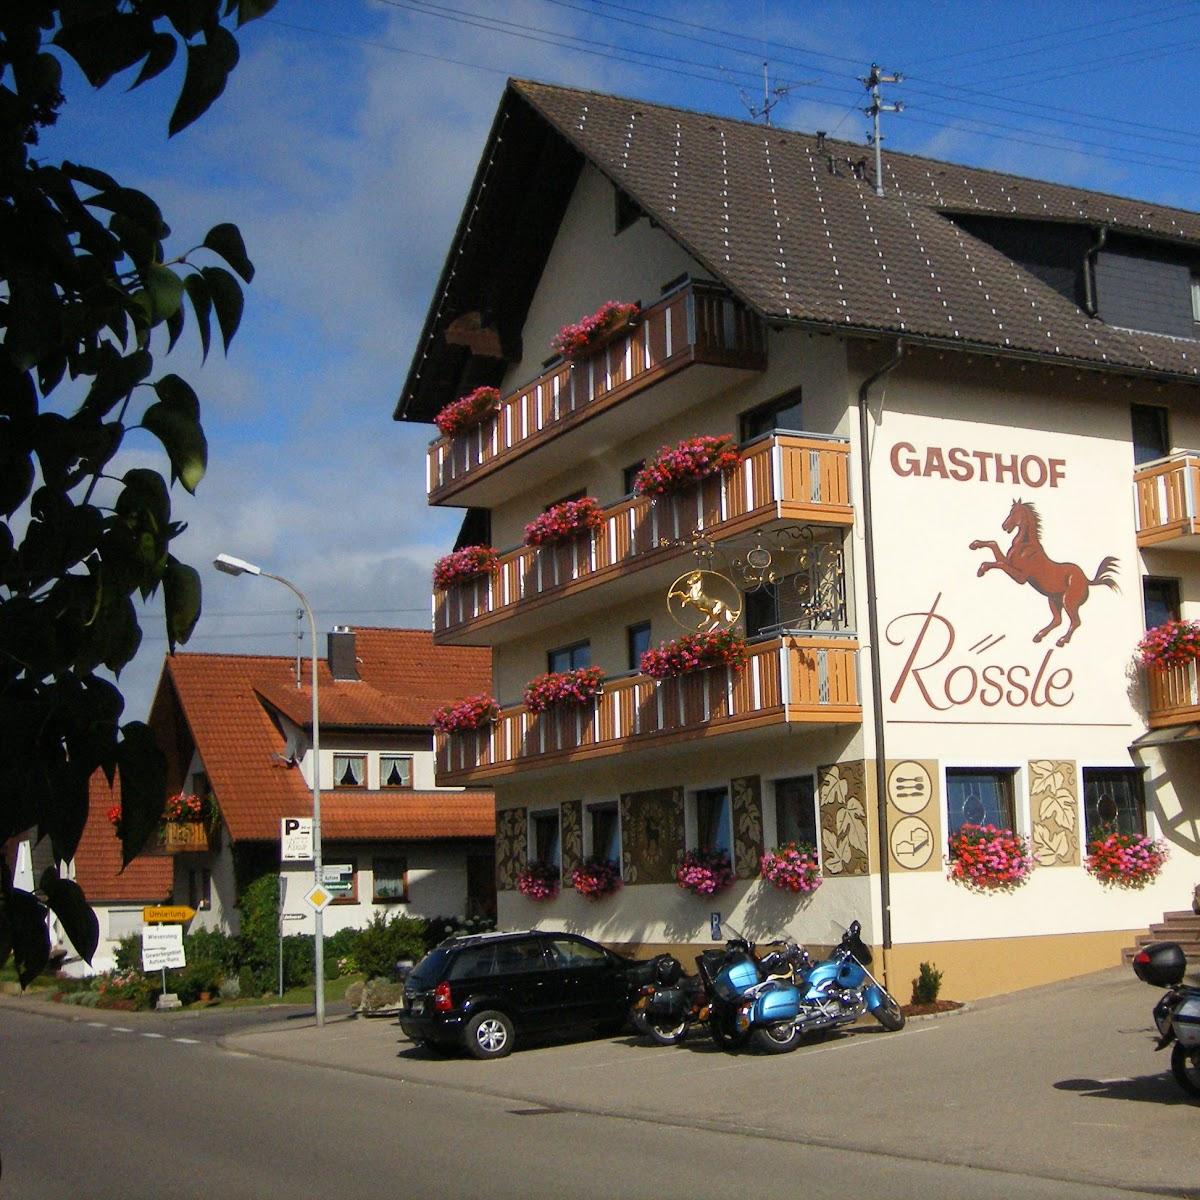 Restaurant "Gasthof Rössle" in Westerheim